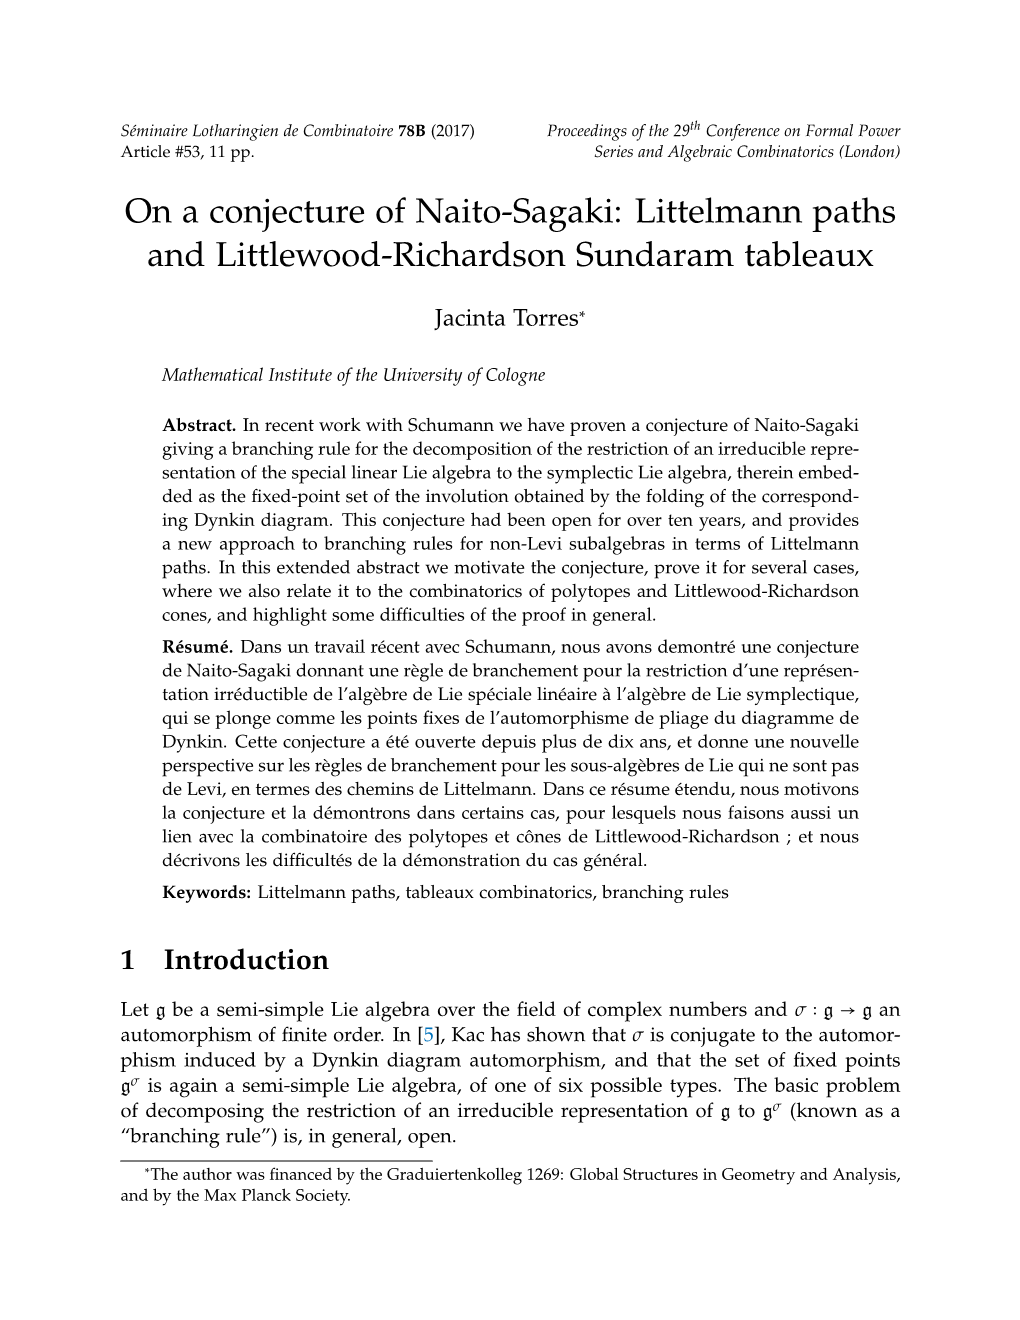 On a Conjecture of Naito-Sagaki: Littelmann Paths and Littlewood-Richardson Sundaram Tableaux